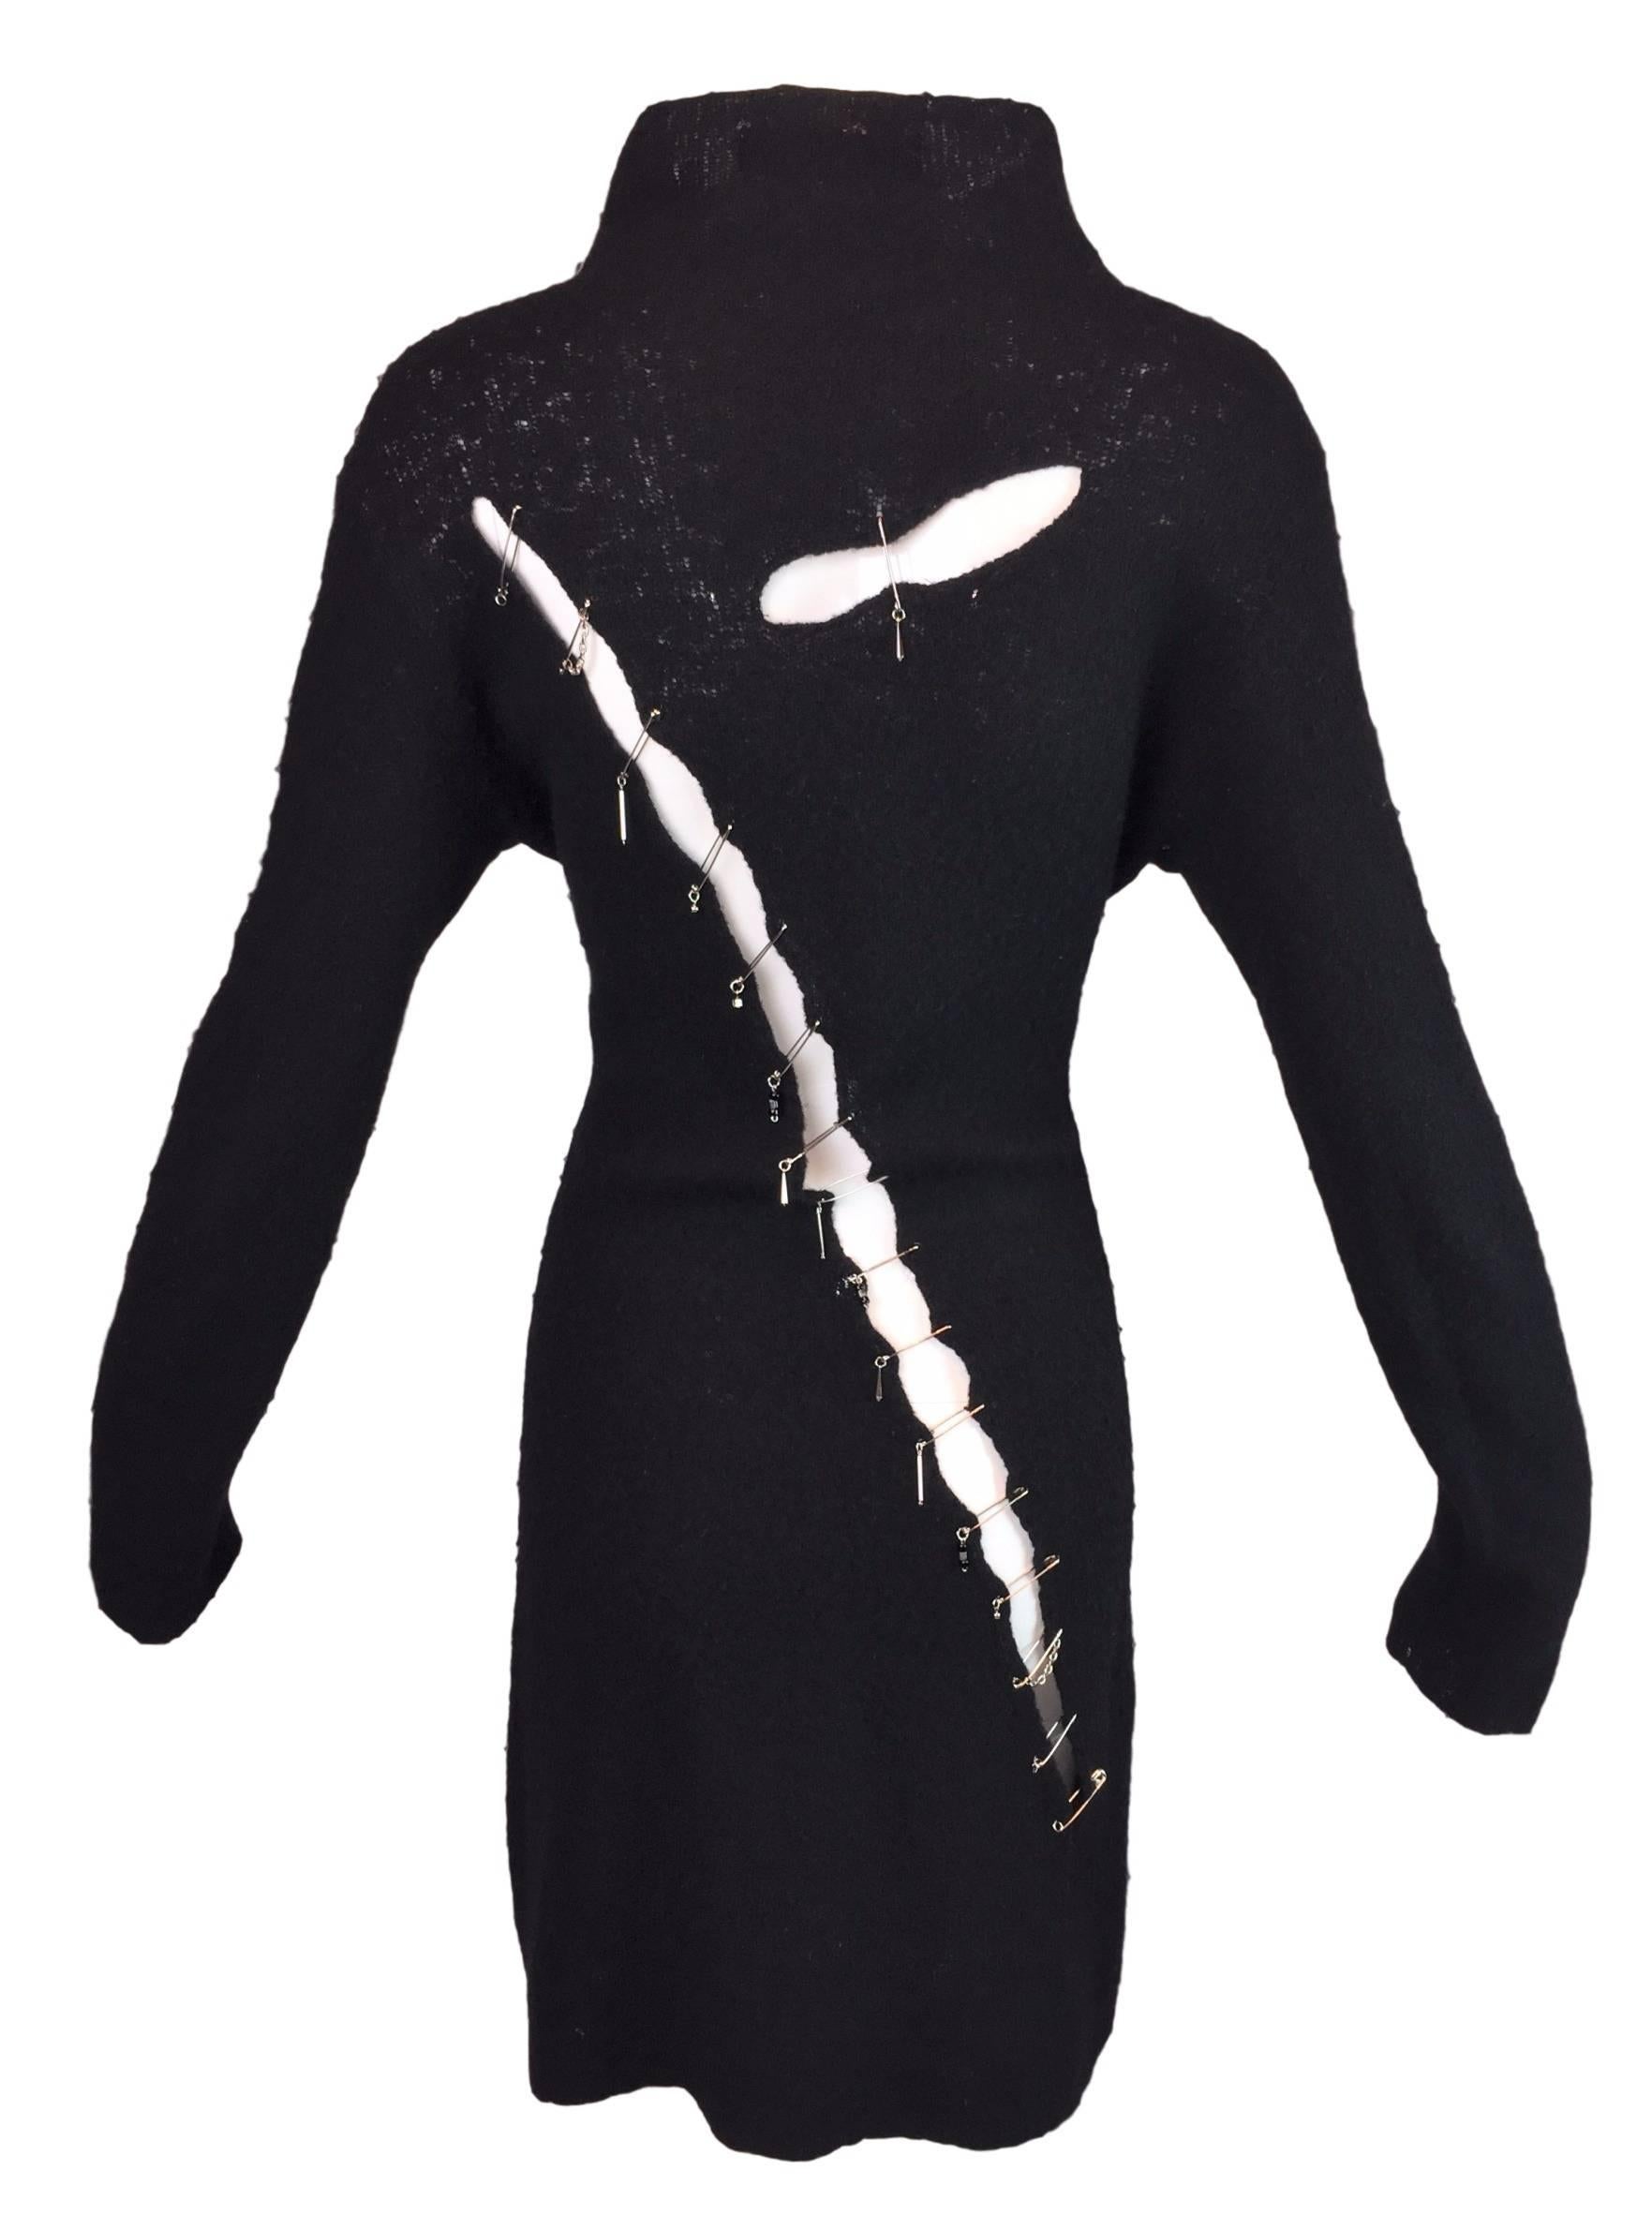 Women's 1990's Yoshiki Hishinuma Black Rocker Slashed Safety Pins Chains Dress